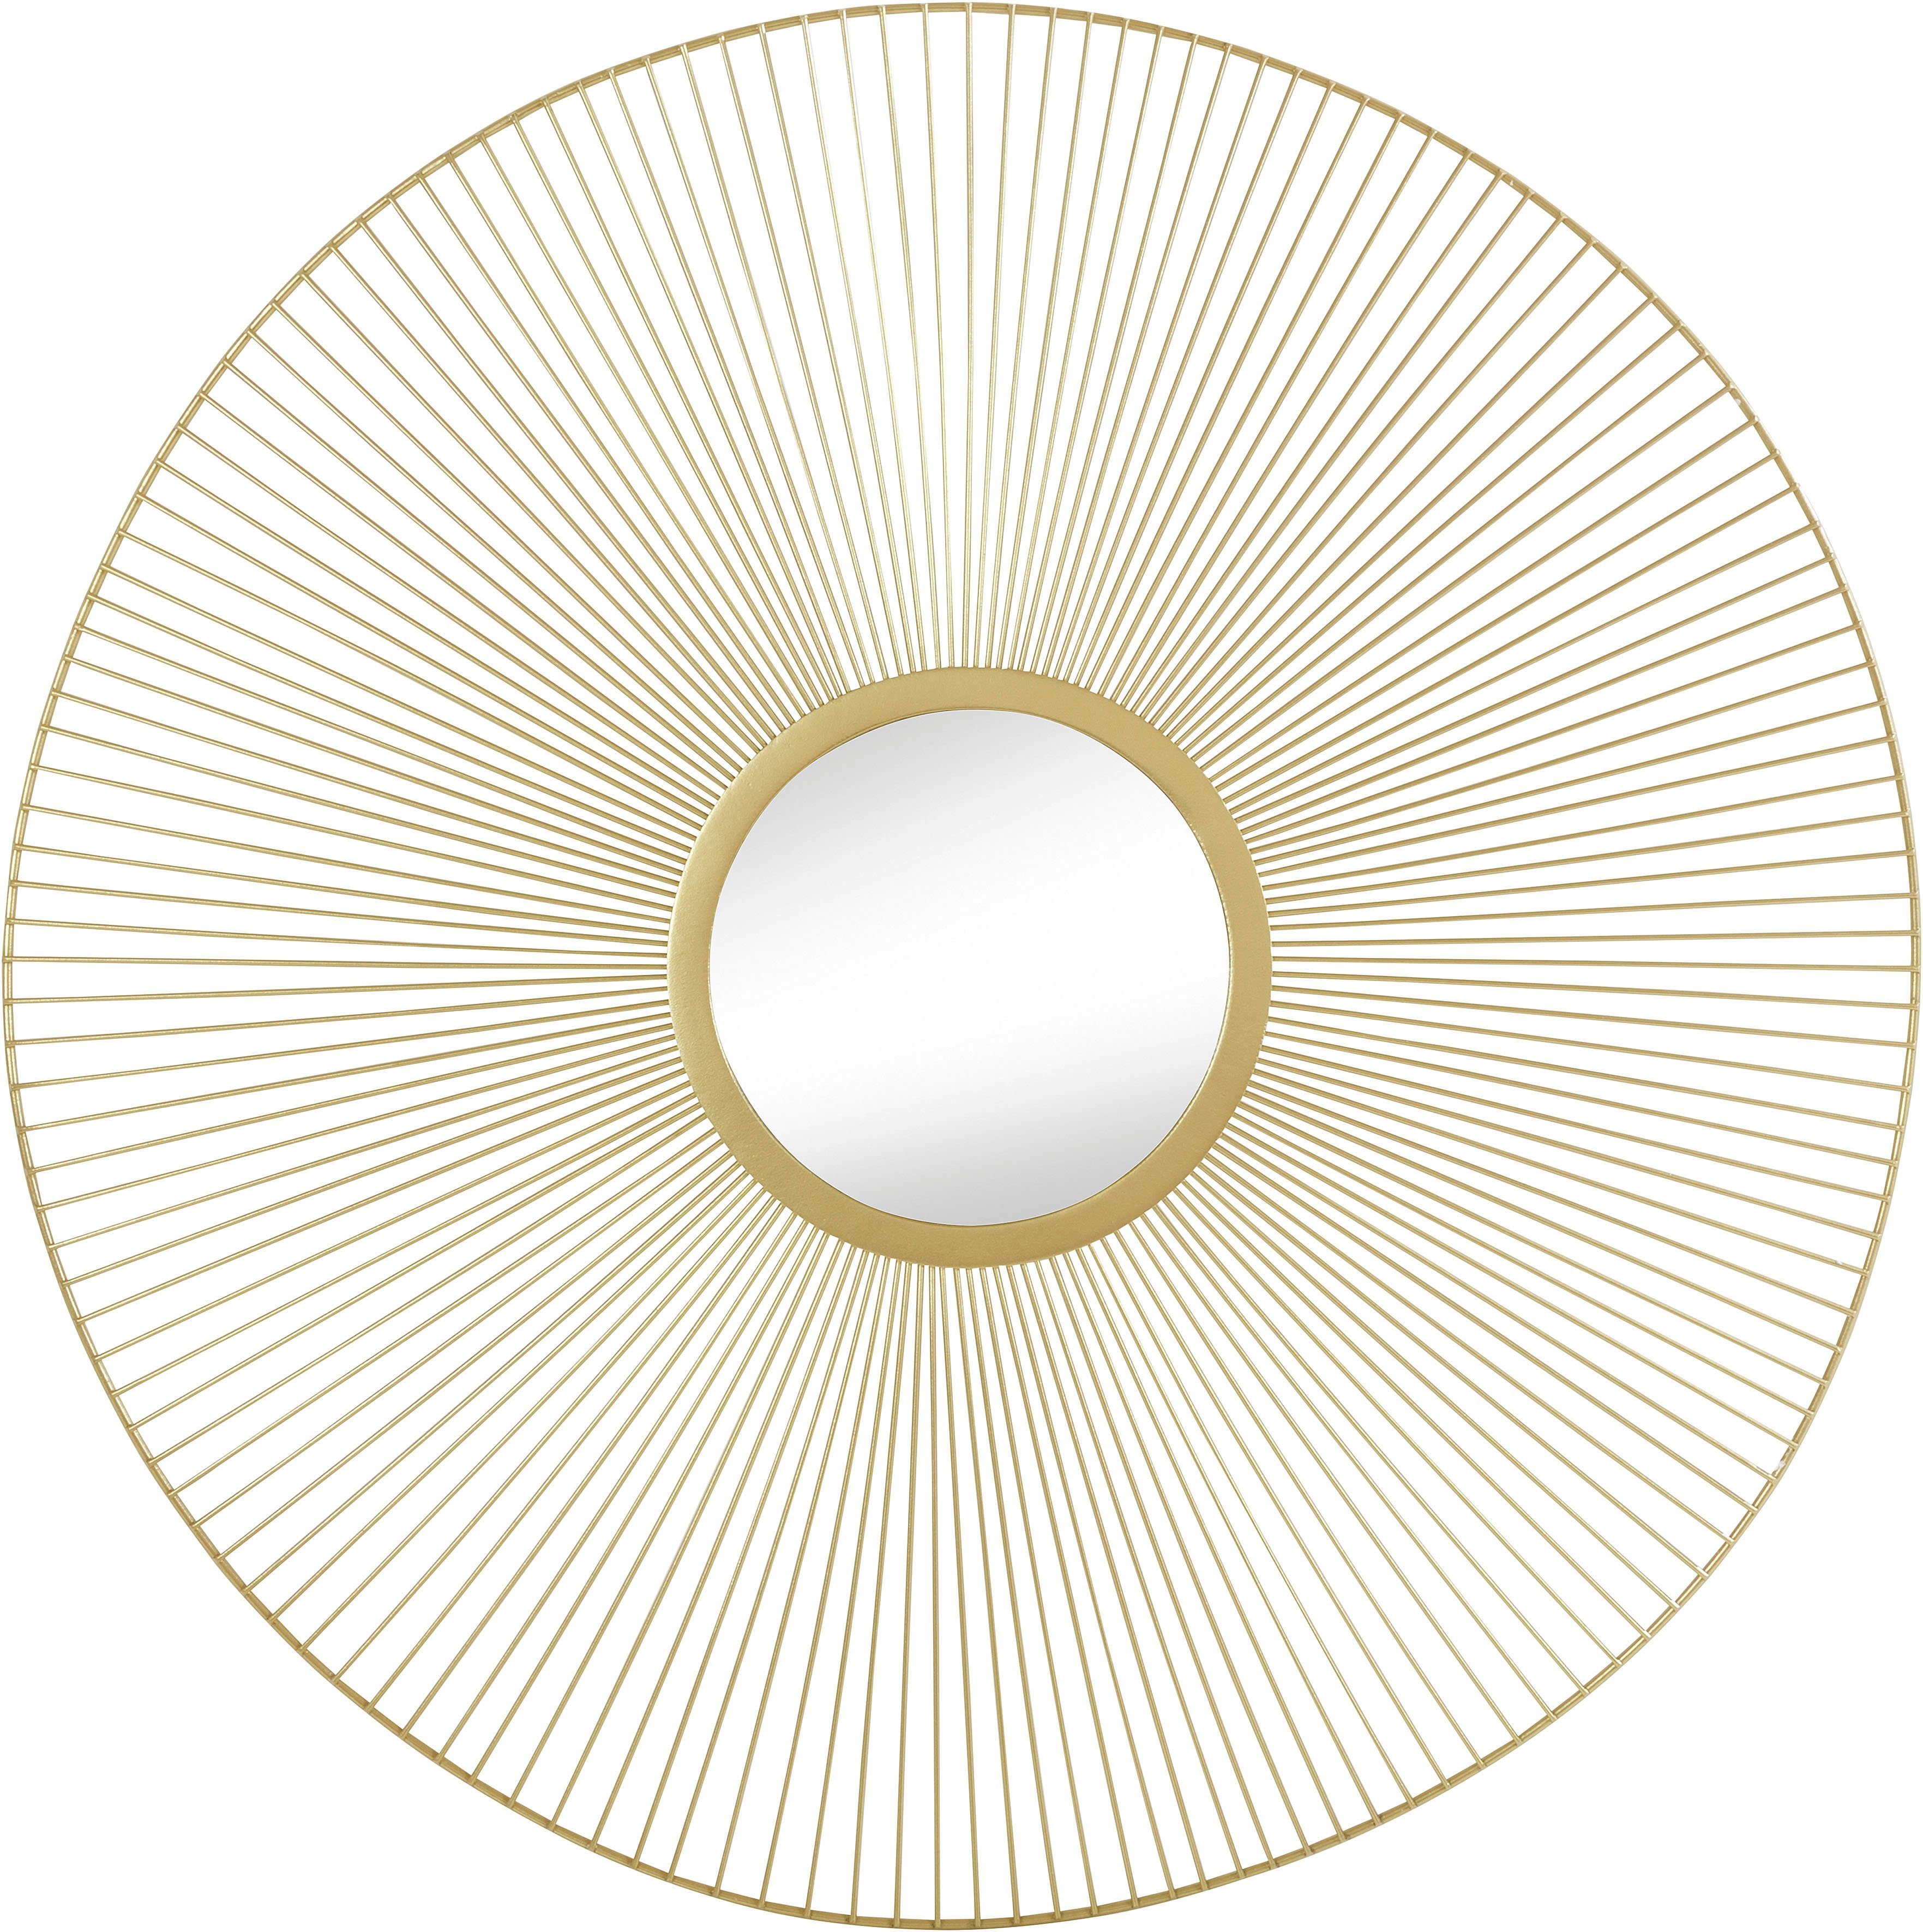 Leonique Sierspiegel Lannion goud, diameter 80 cm